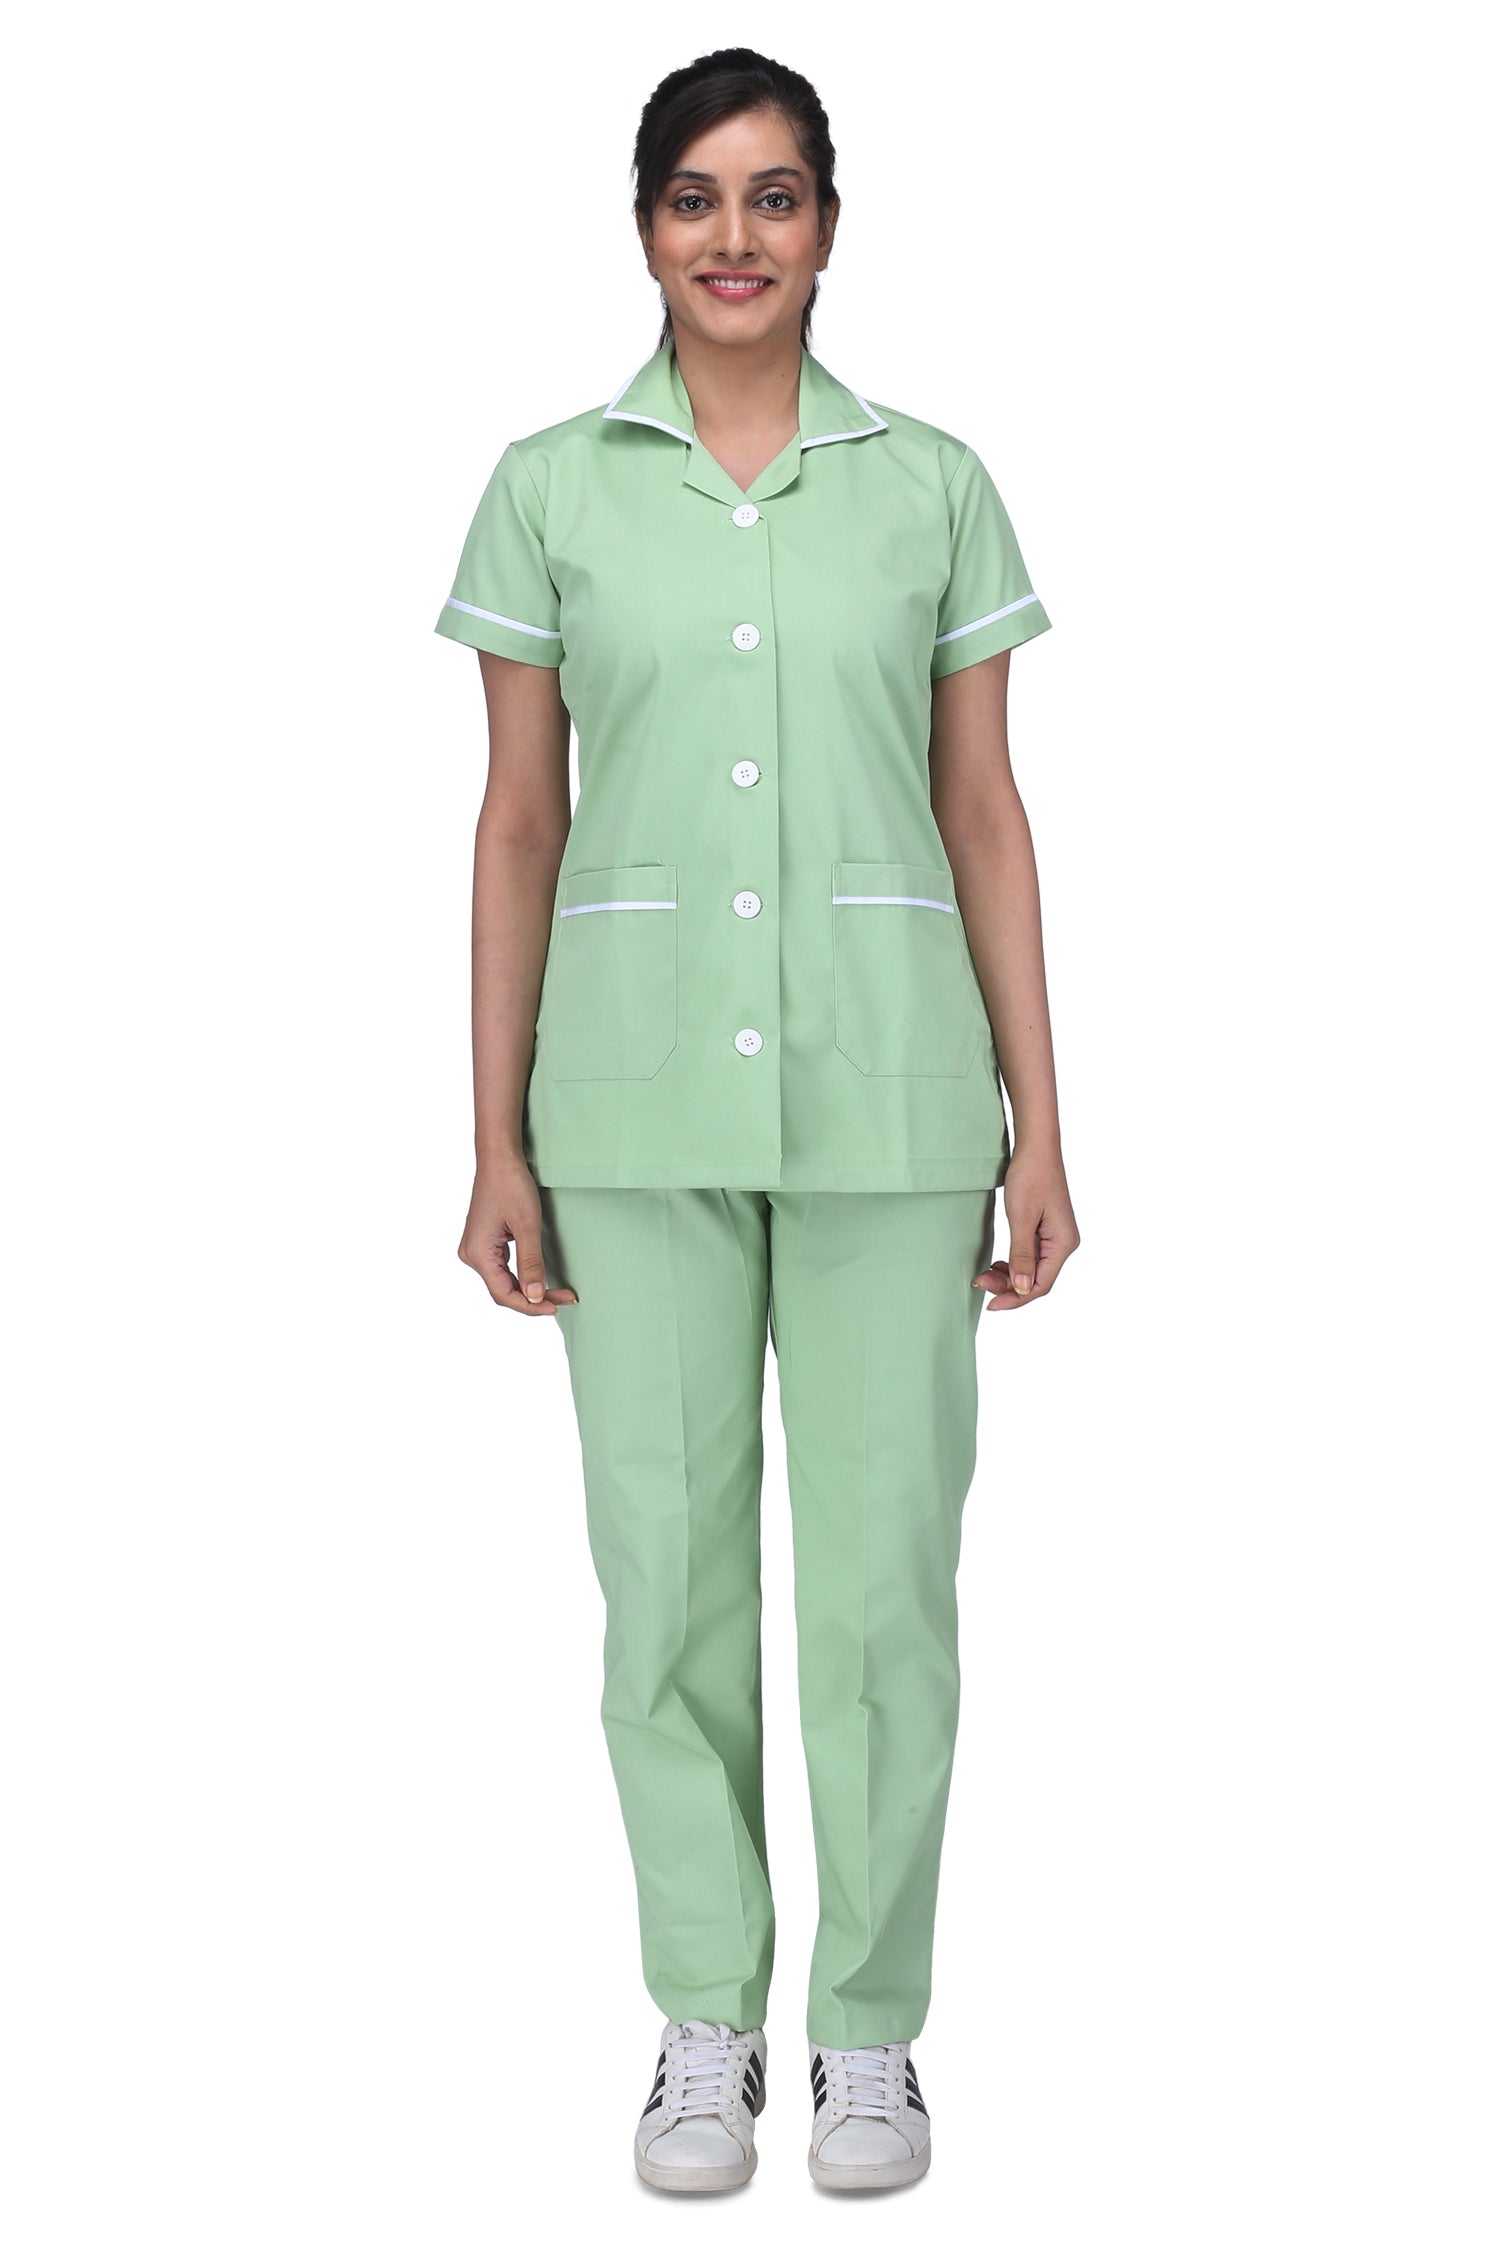 Female Nurse Uniform NT01